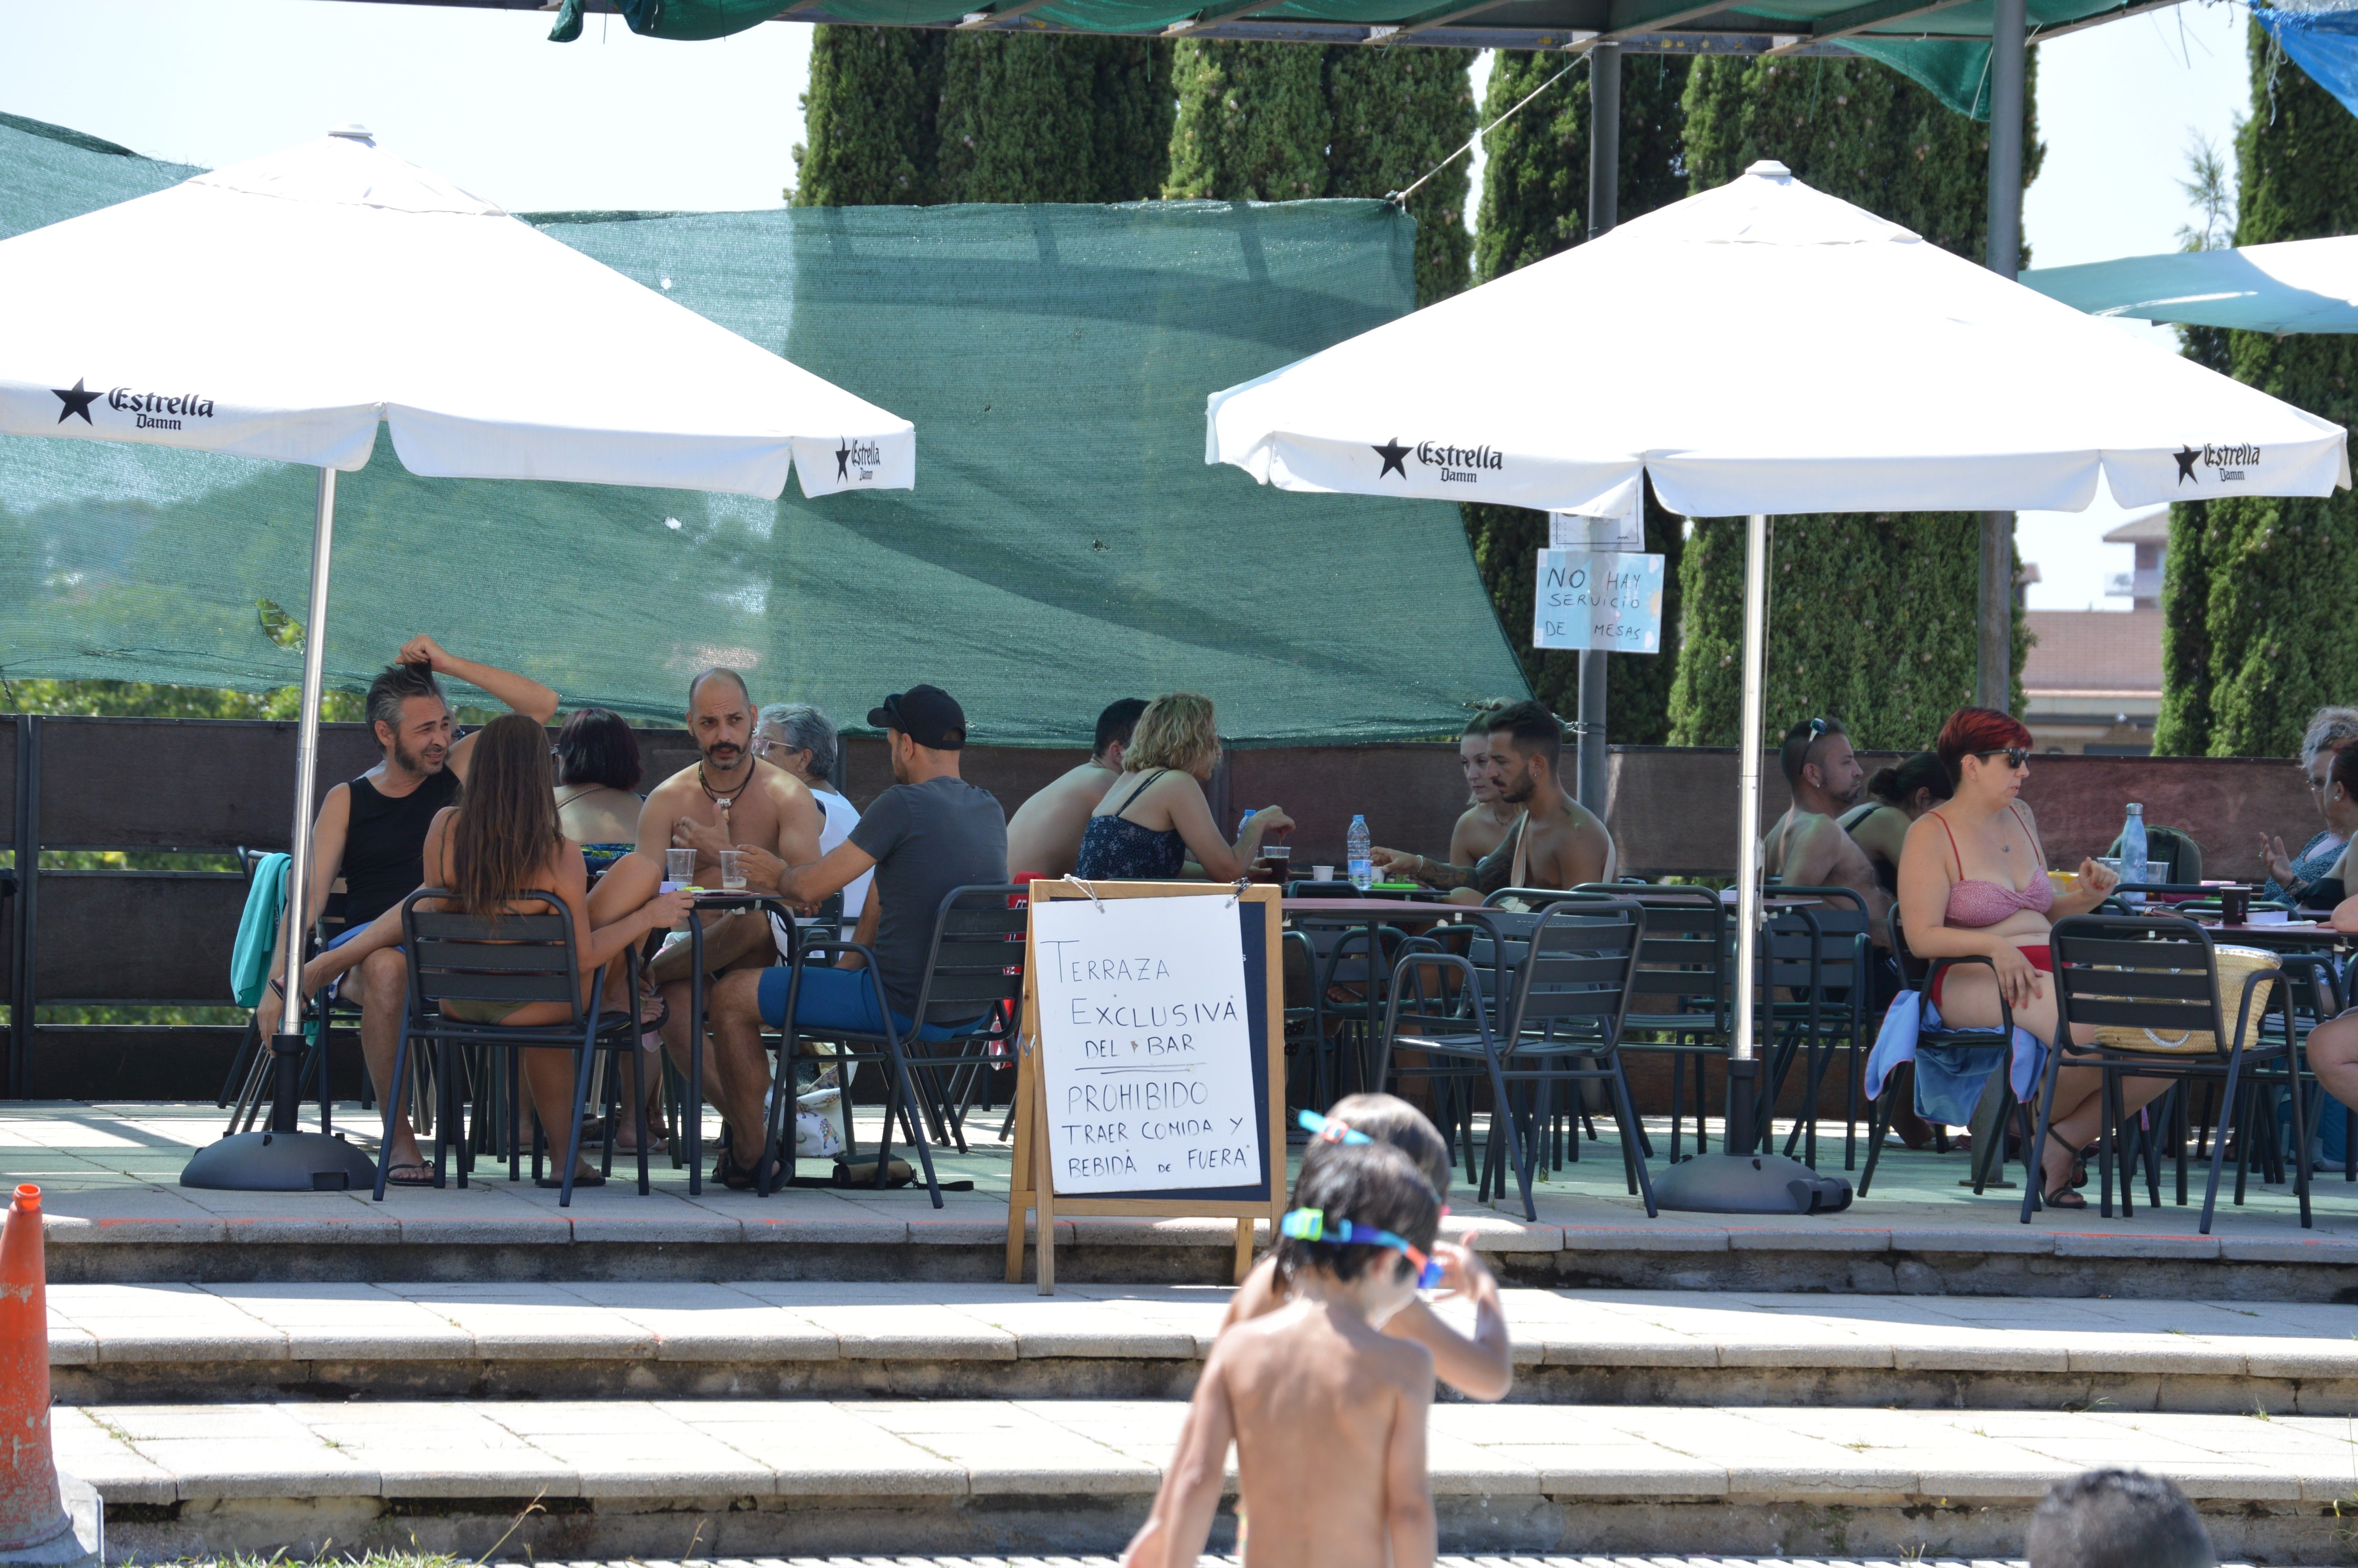 Refrescar-se a la piscina del Turonet durant l'onada de calor a Cerdanyola. FOTO: Nora Muñoz Otero